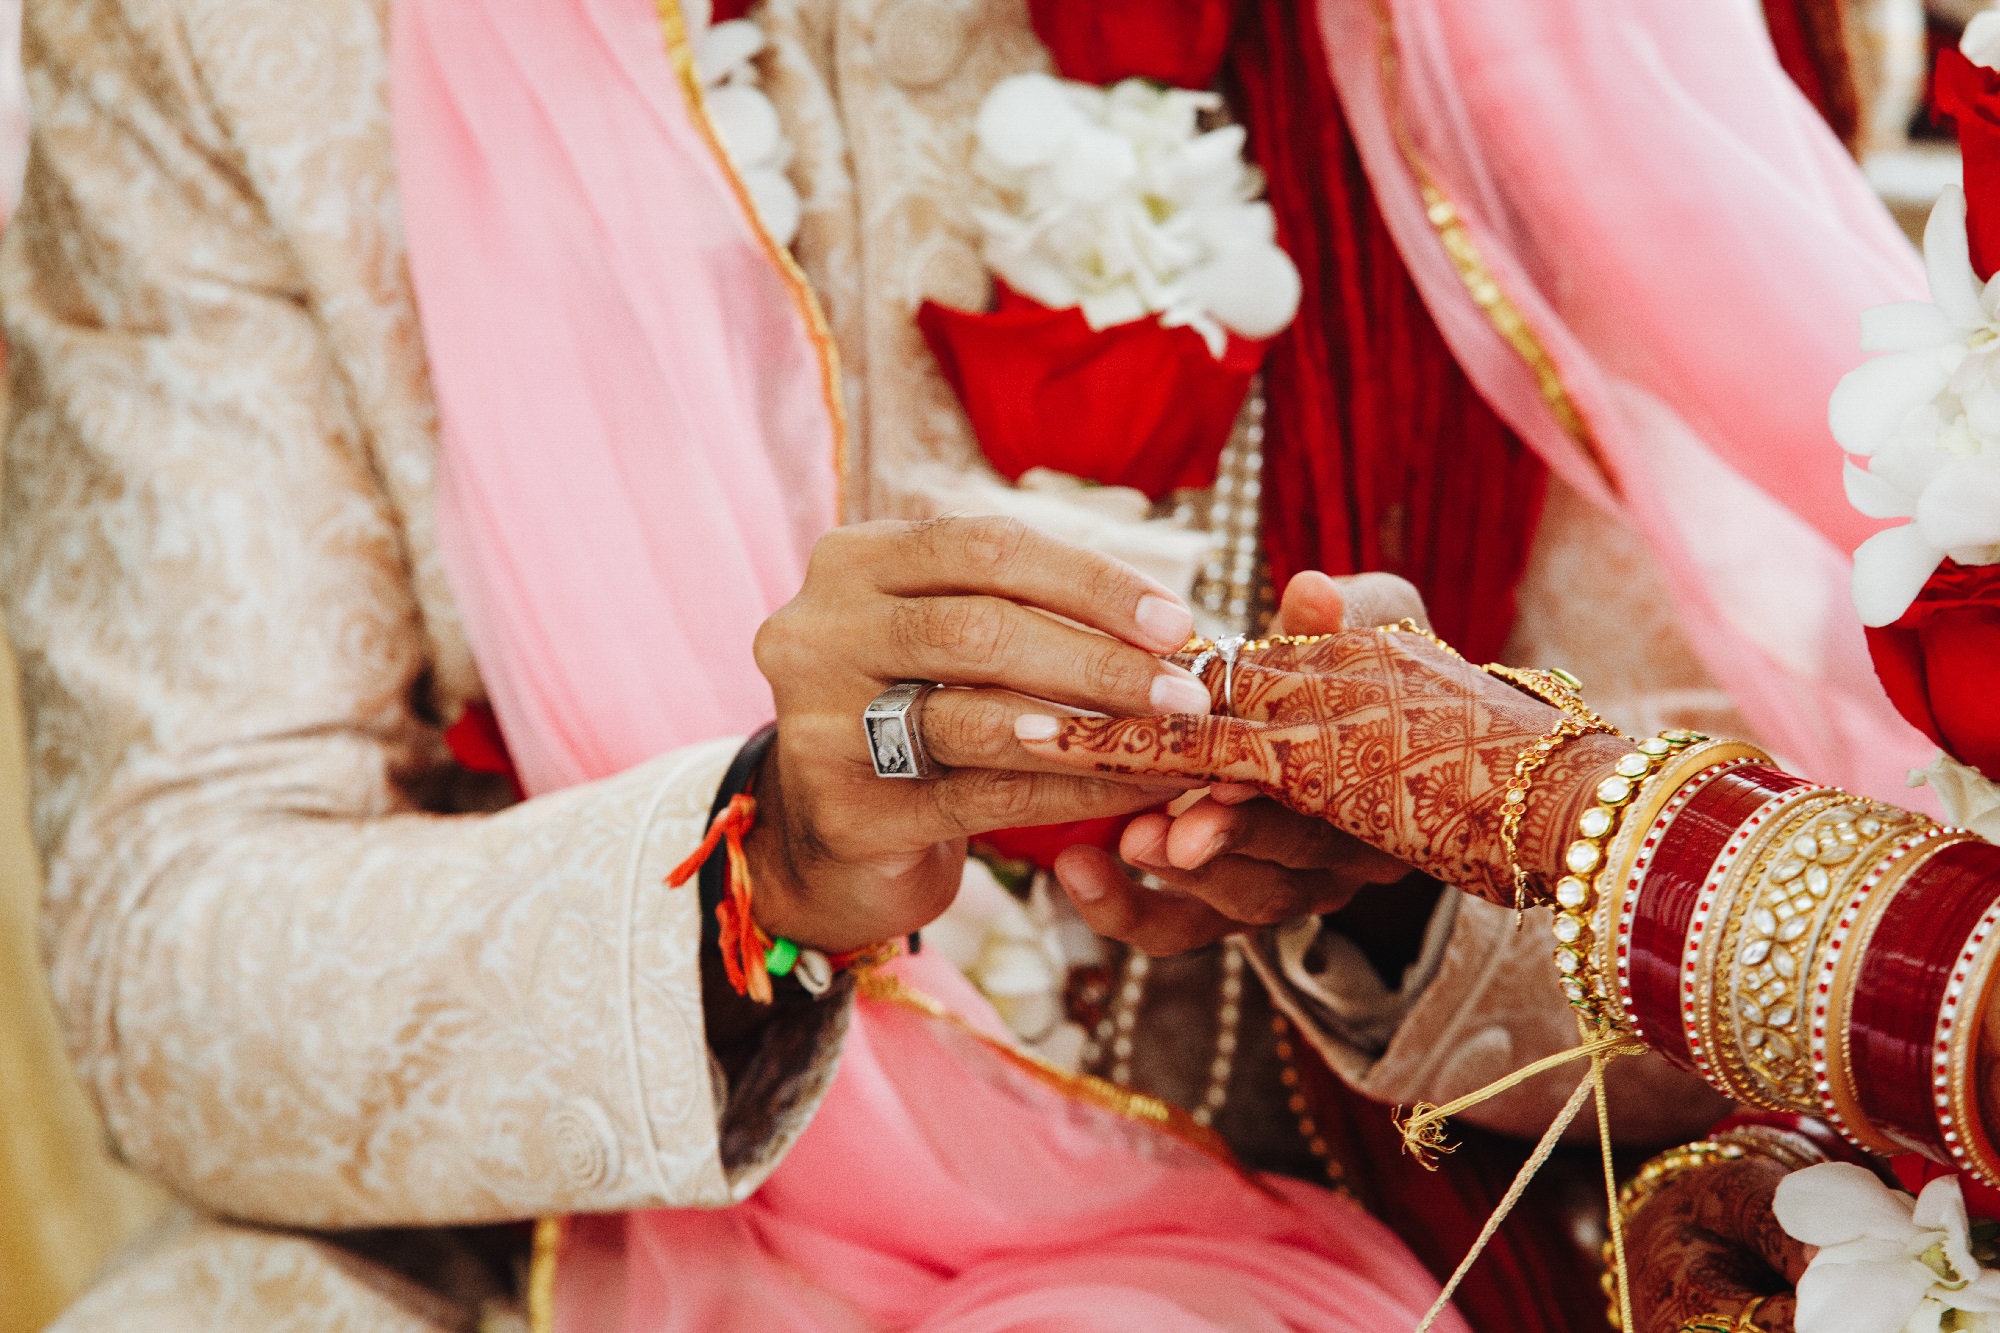 Engagement Photography in Bangalore - Picture Quotient